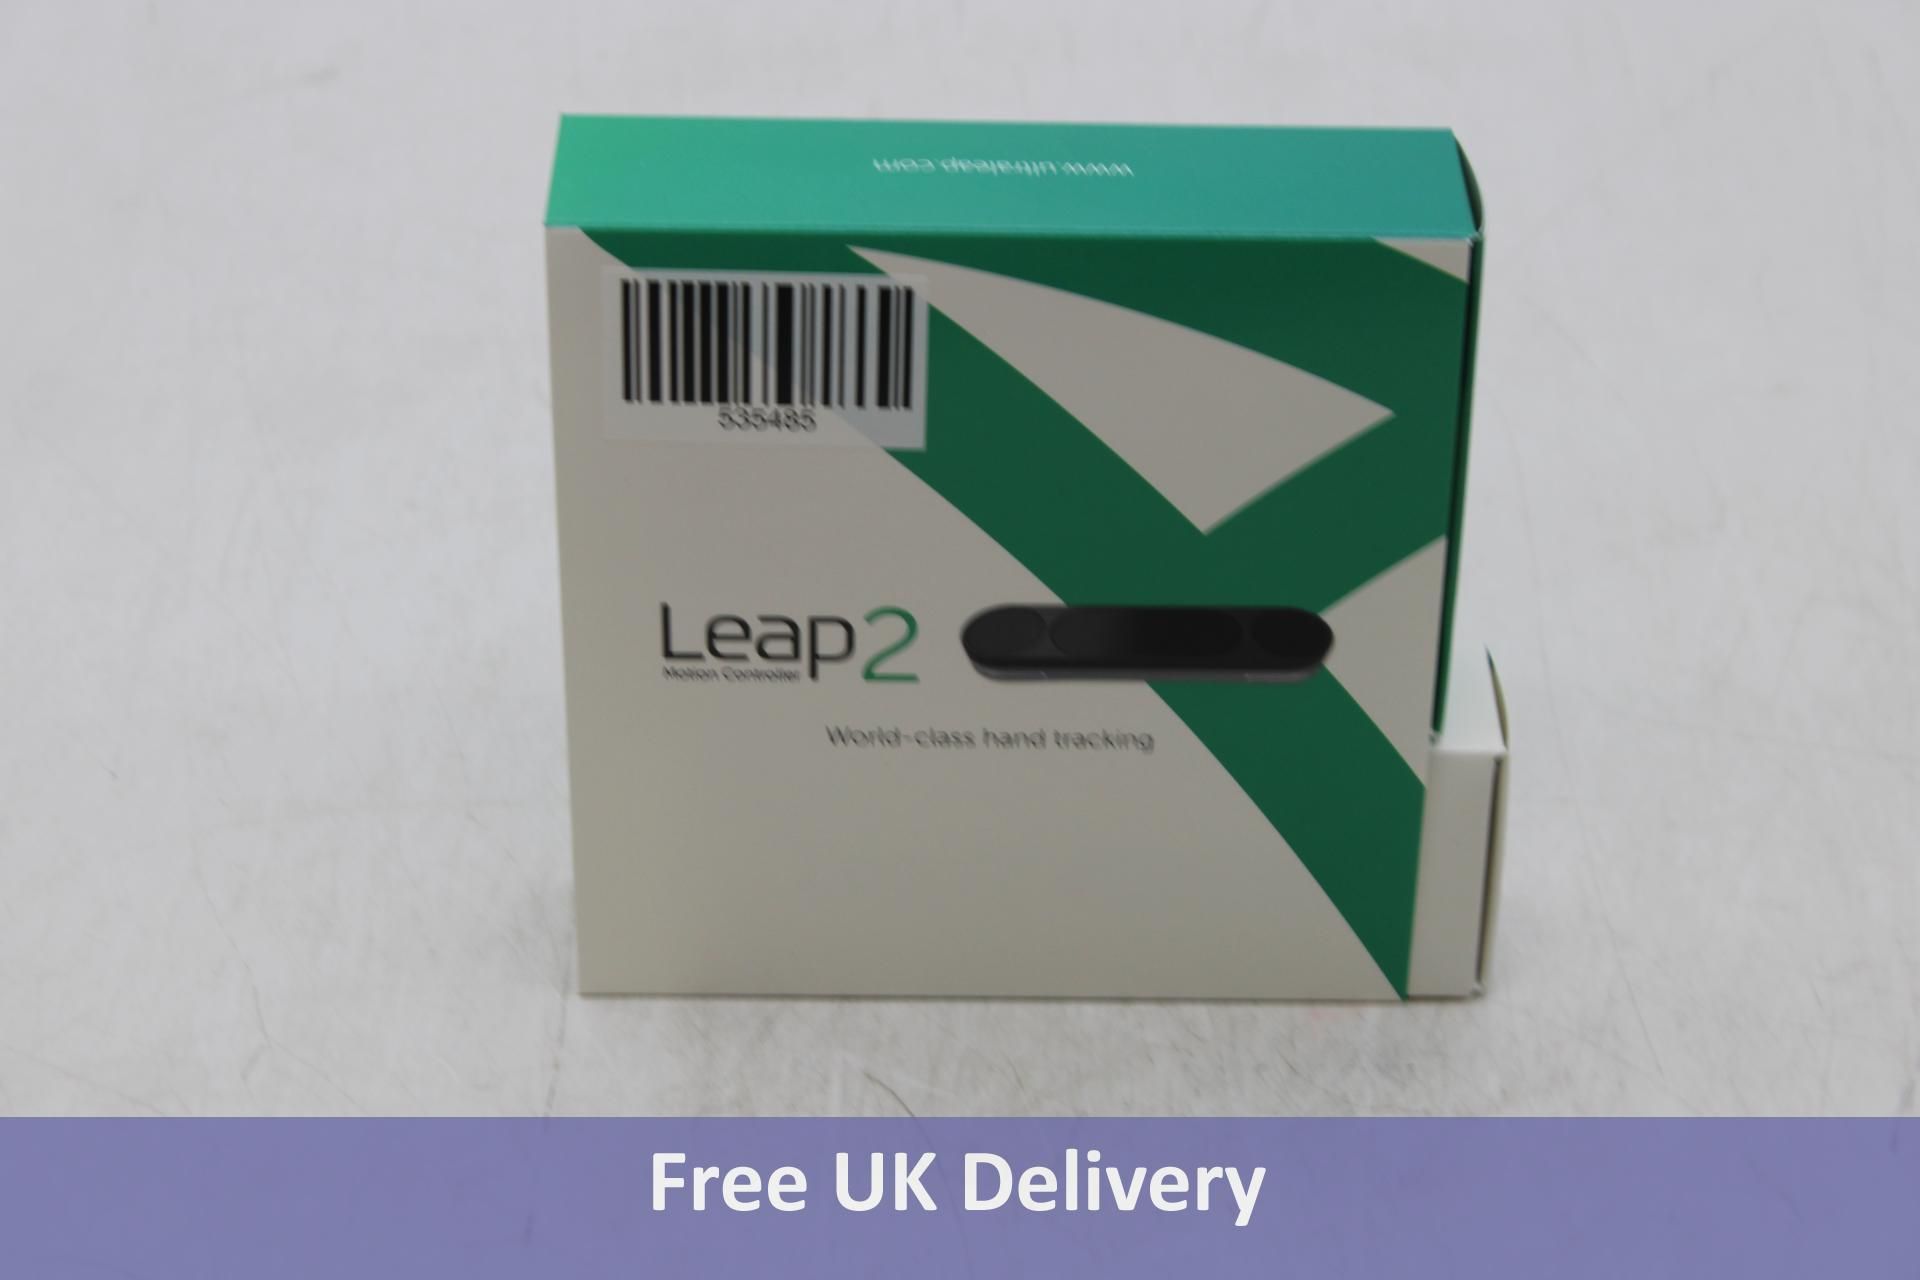 Ultraleap Leap Motion Controller 2. Brand new, sealed